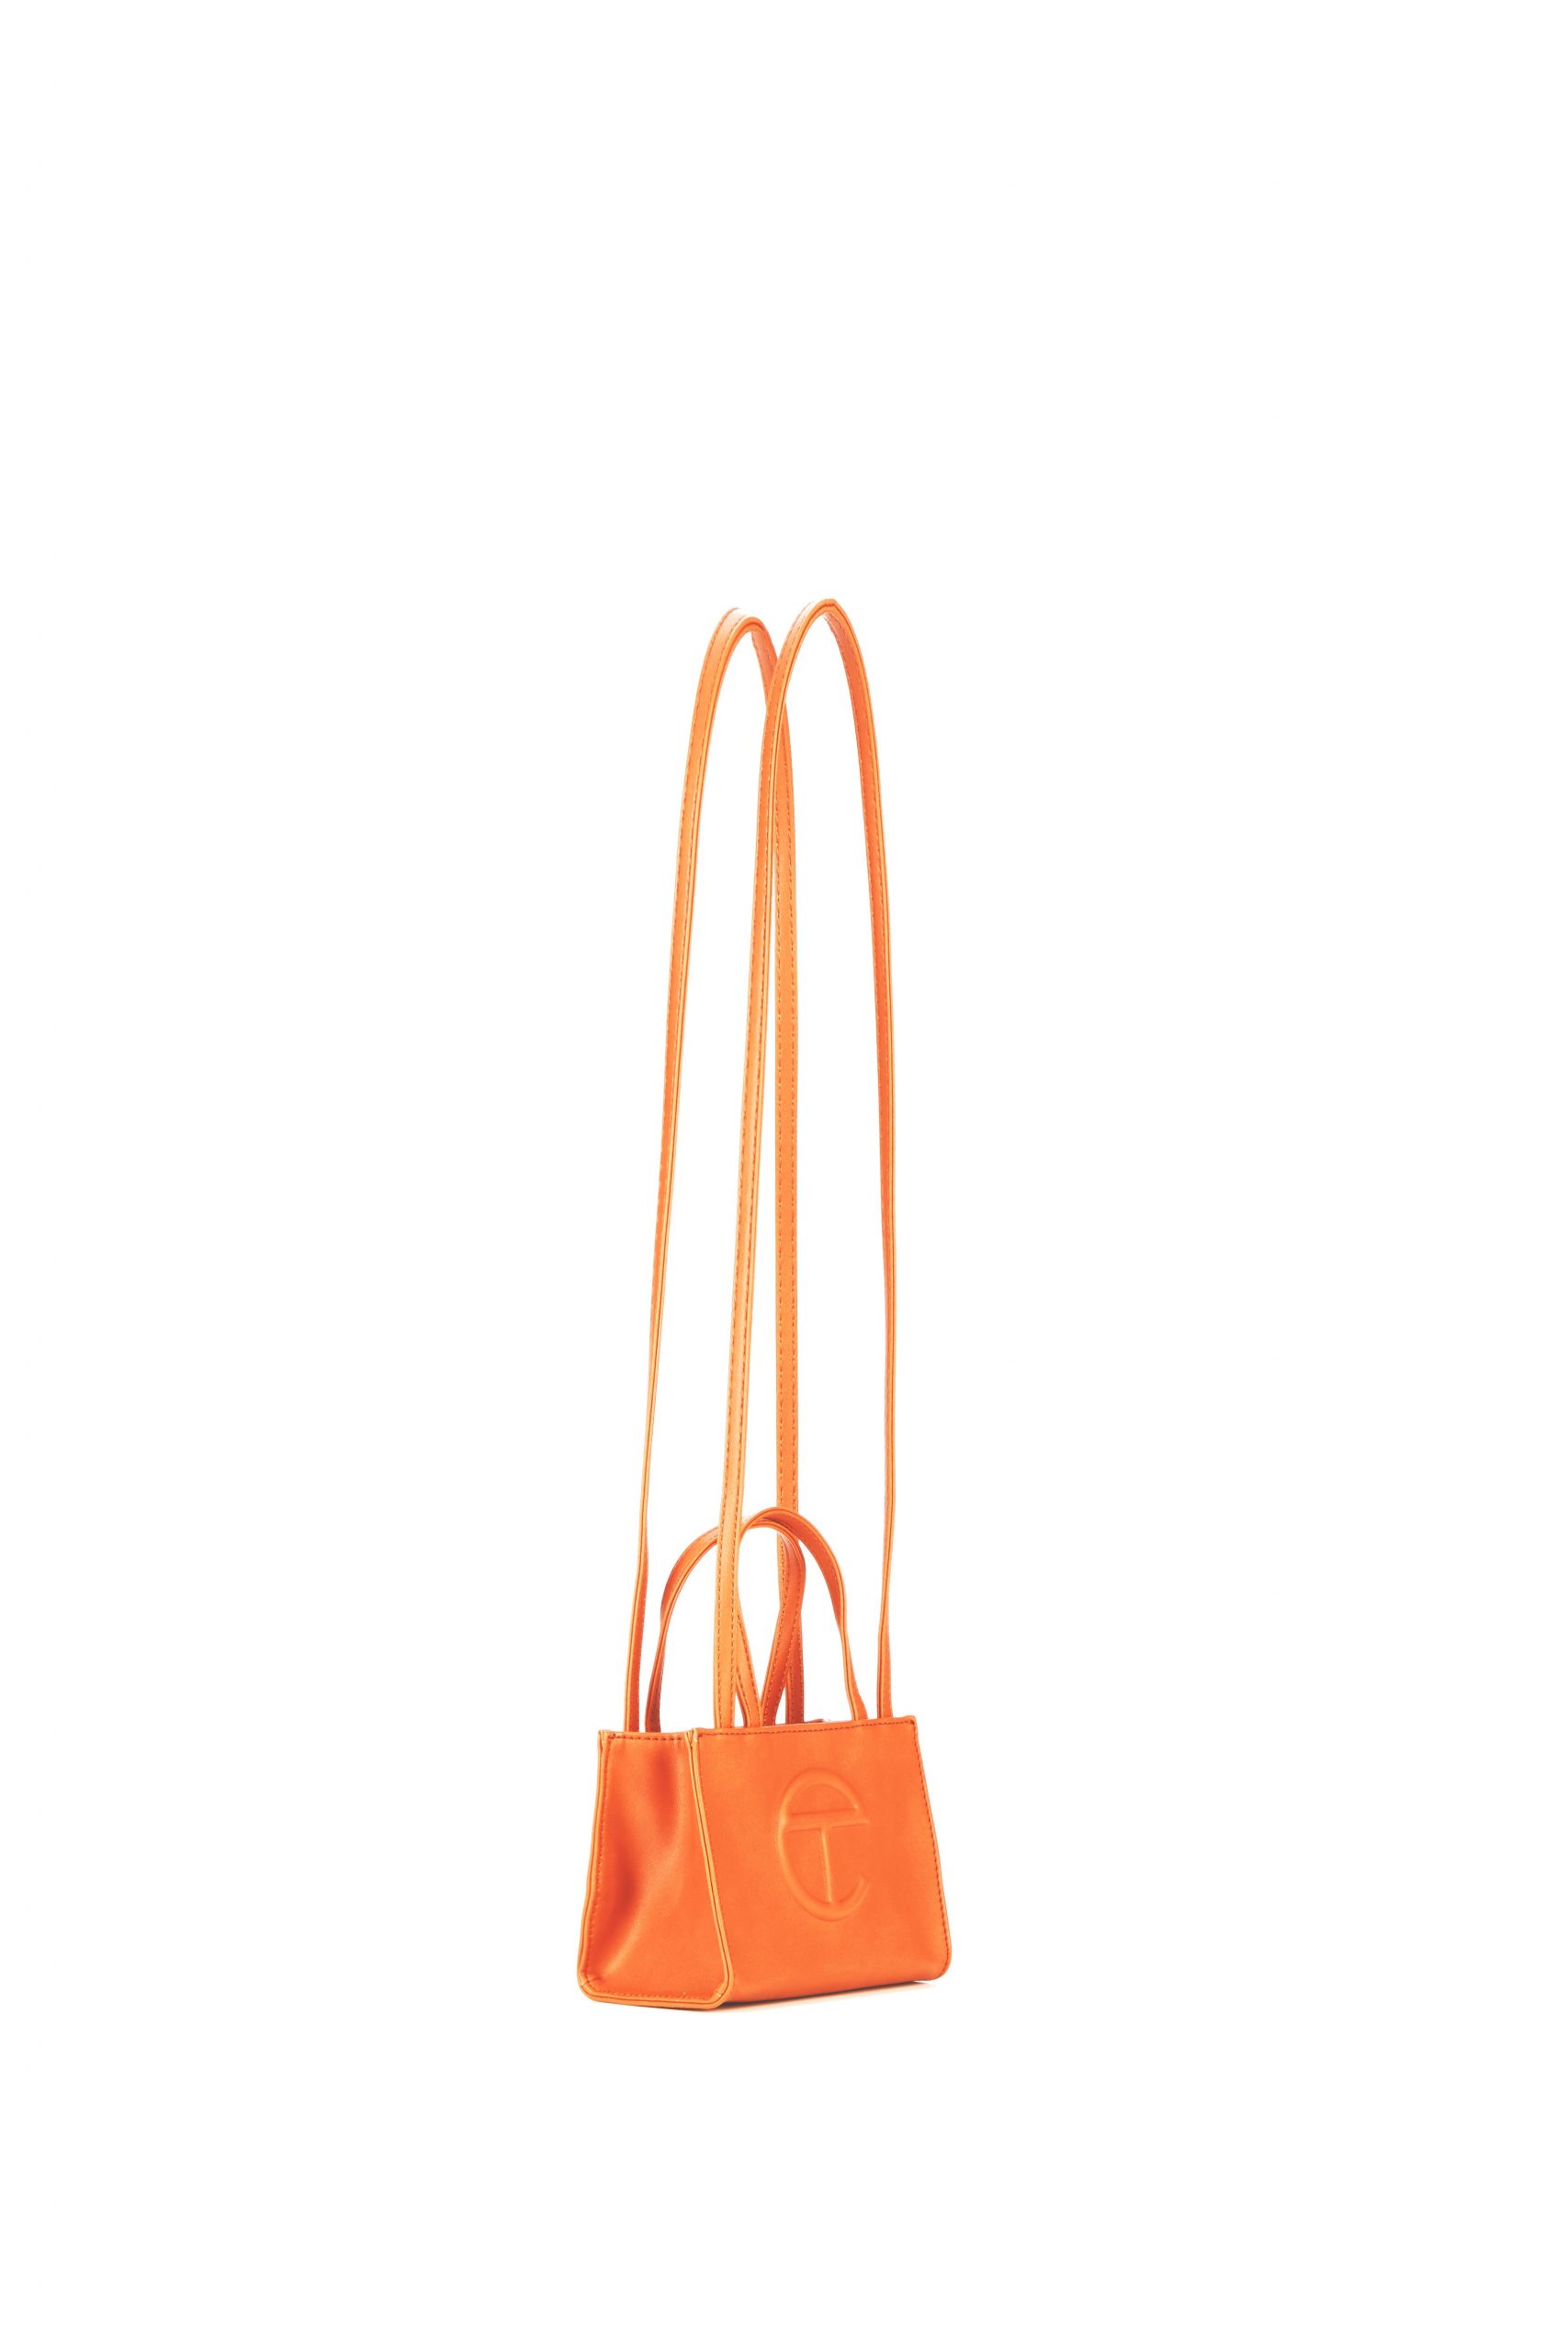 Small Orange Shopping Bag